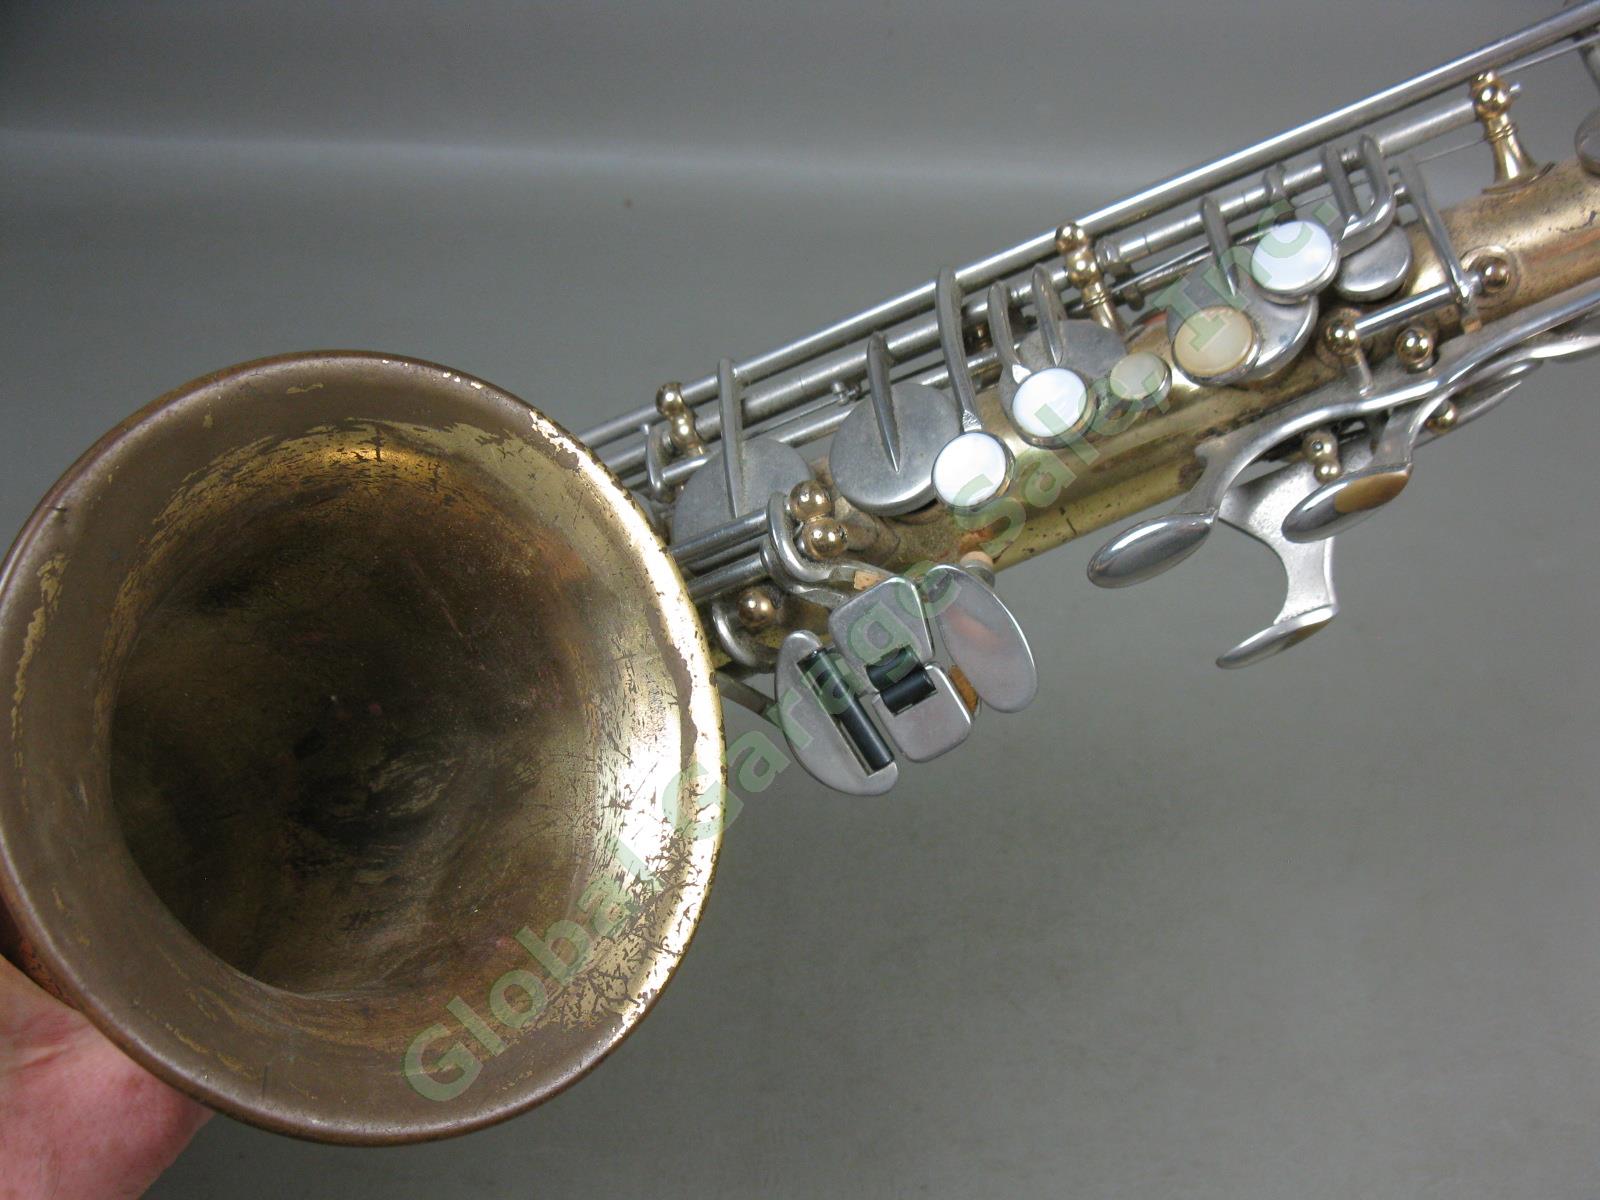 Vtg Yamaha YAS-21 Alto Saxophone W/ Case As-Is Parts/Repair Serial 016985 1975? 8